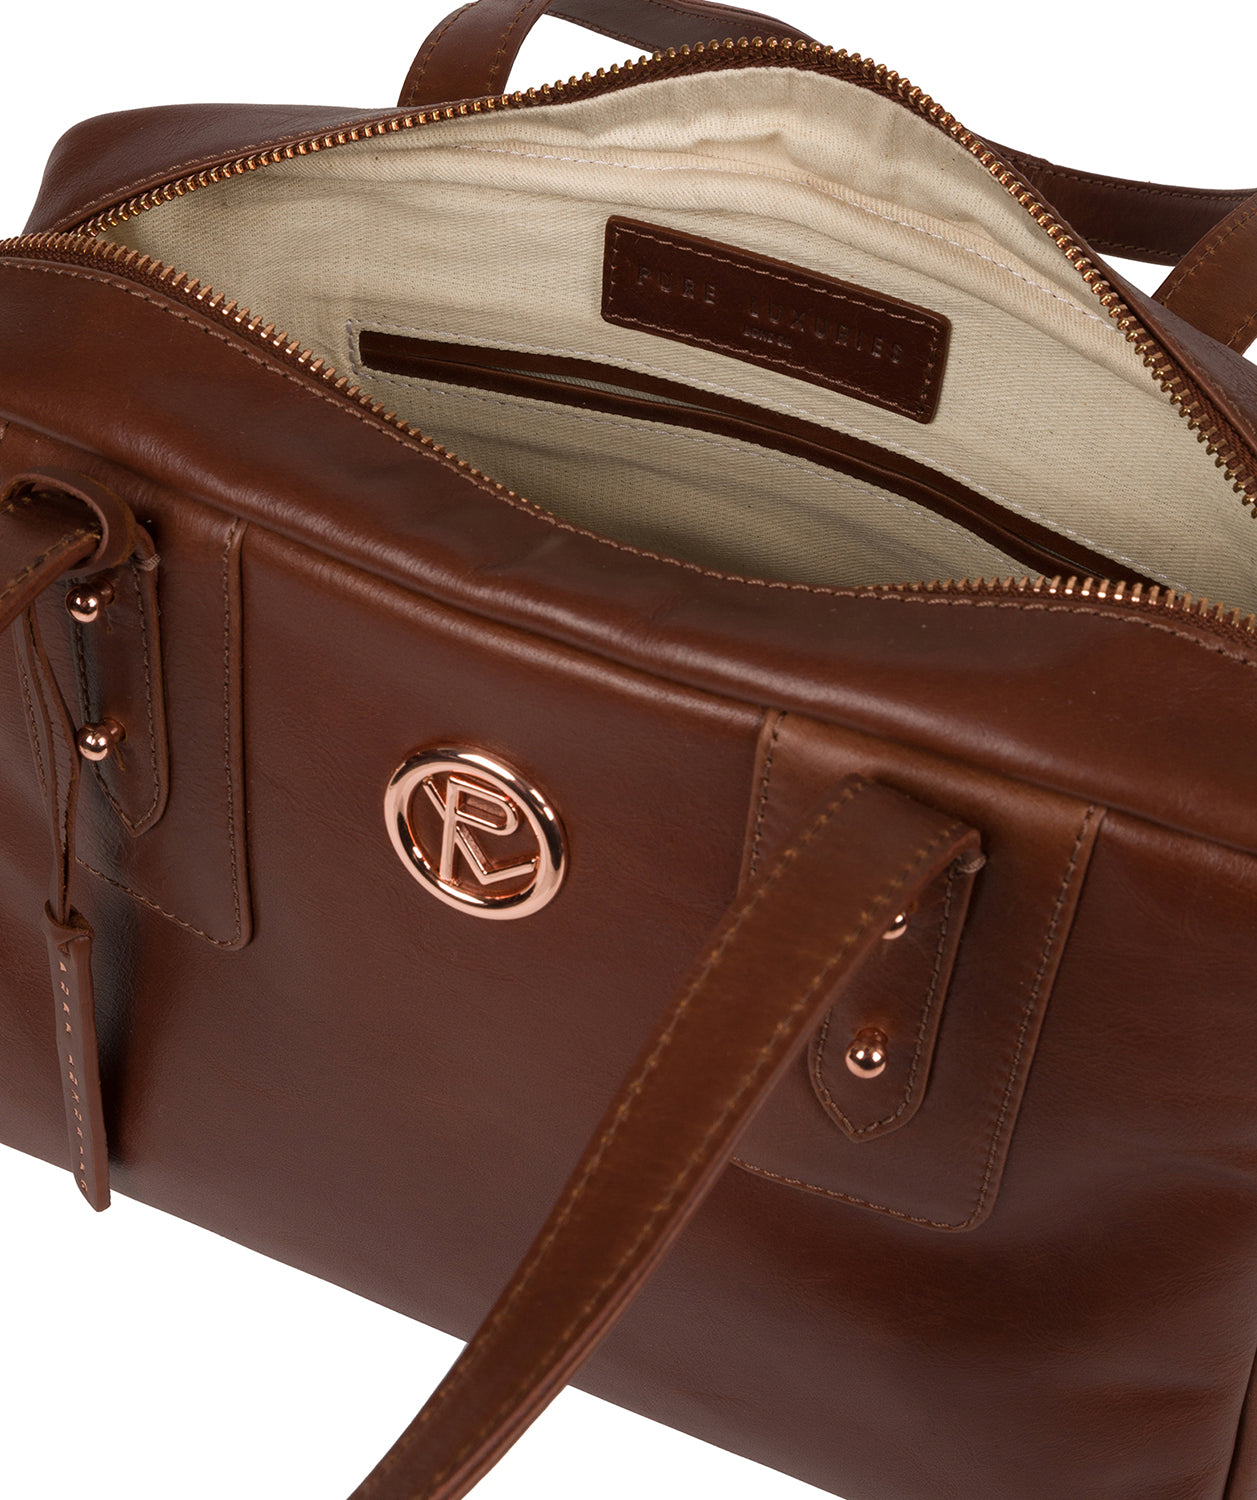 'Madox' Cognac Leather Handbag image 4